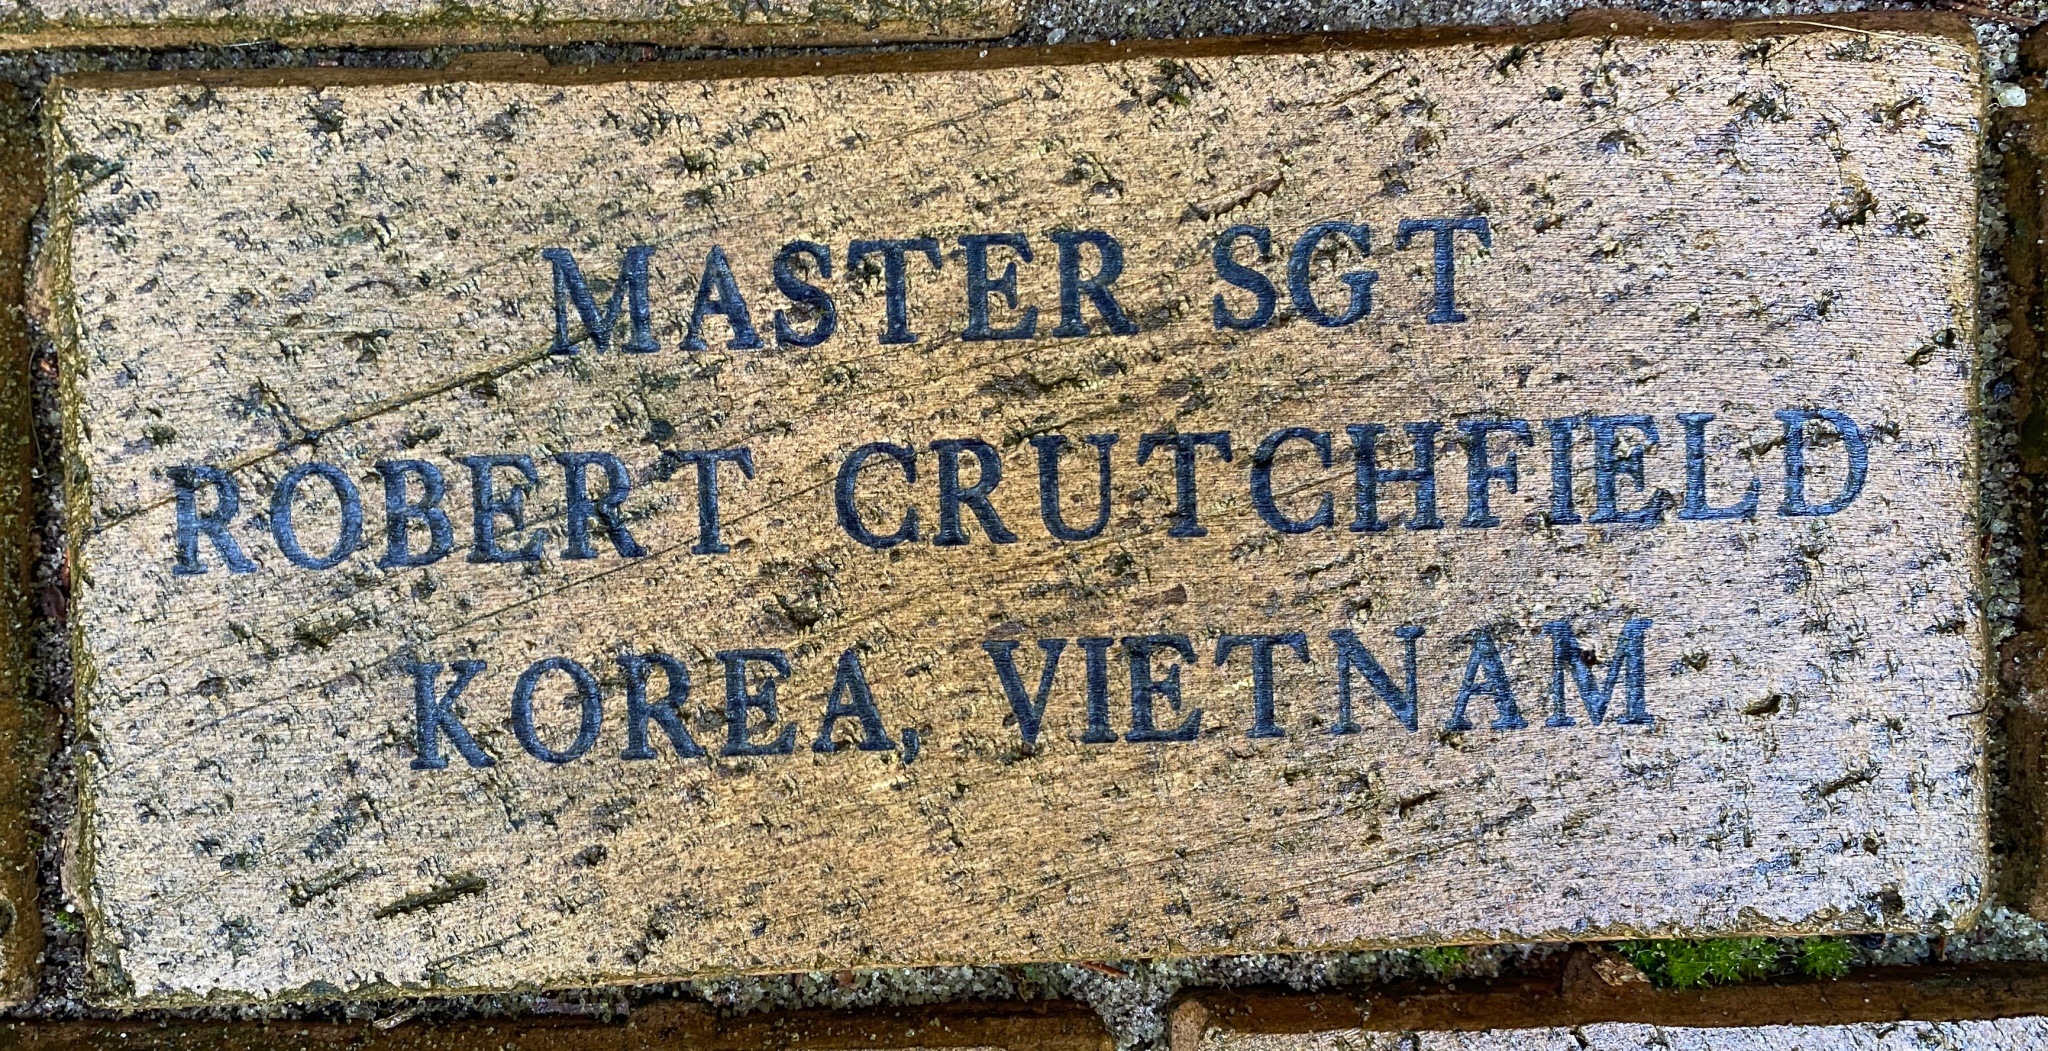 MASTER SGT ROBERT CRUTCHFIELD KOREA, VIETNAM